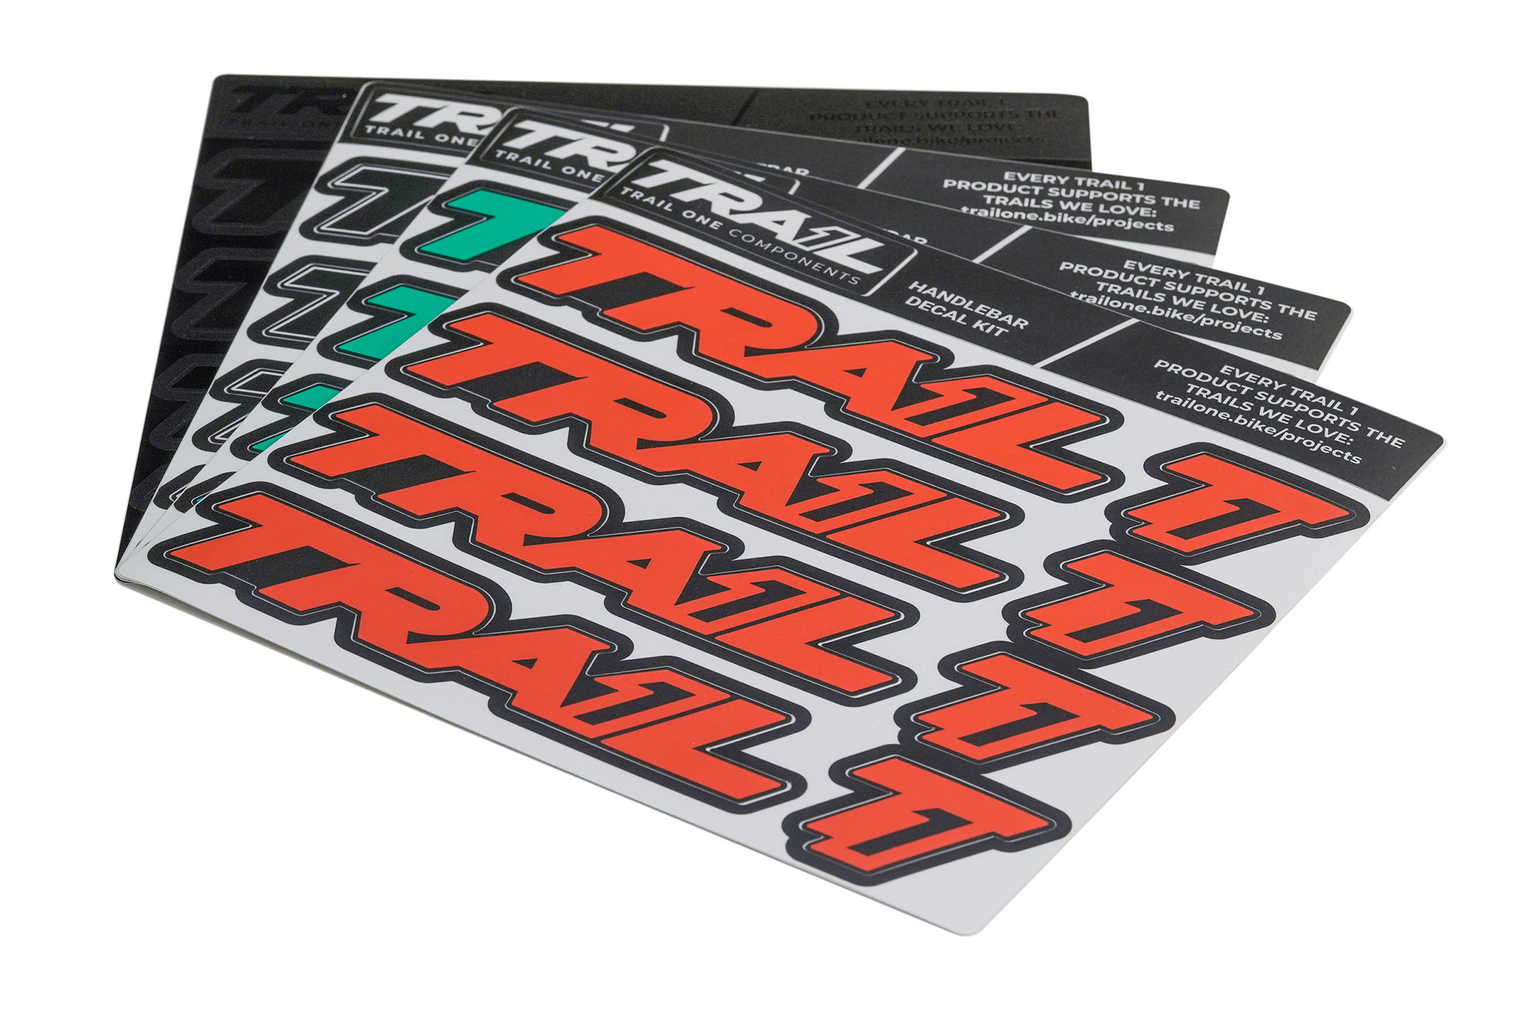 Trail One Components Crockett Handlebar Decal Kit - Orange - Sticker/Decal - Crockett Handlebar Decal Kit